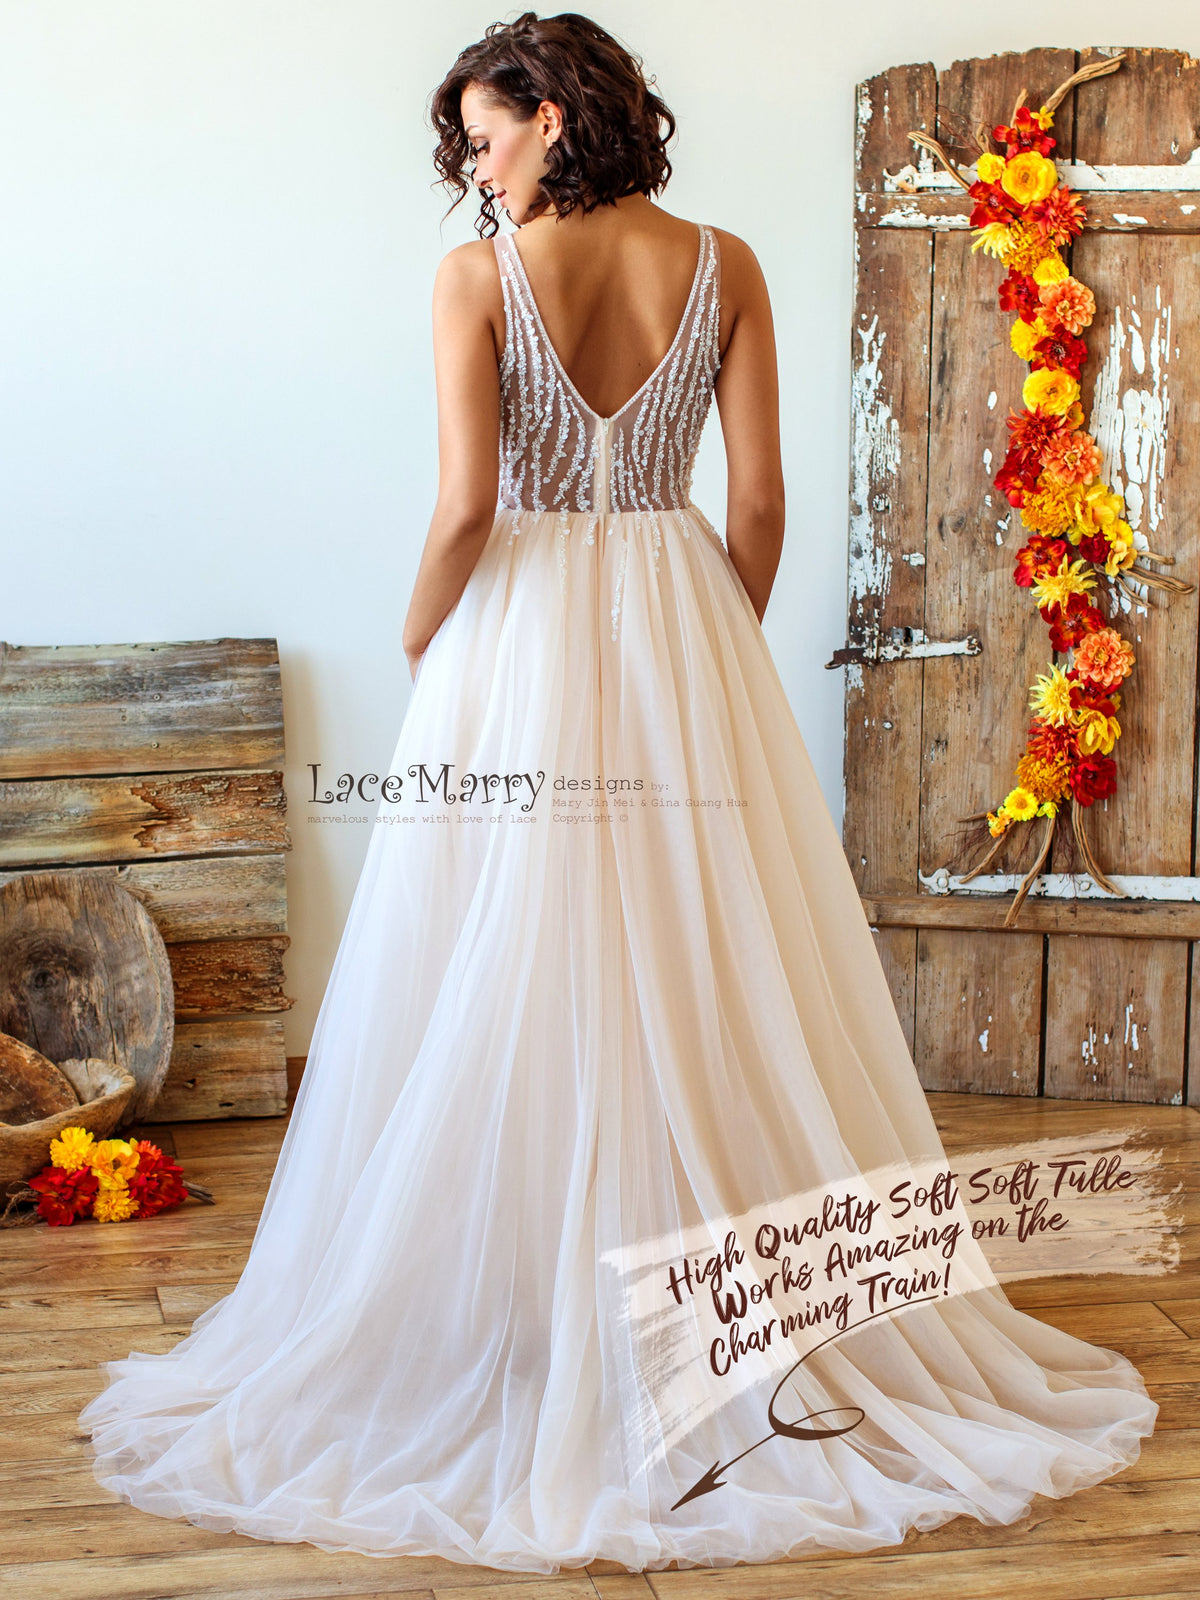 Soft Tulle Wedding Dress